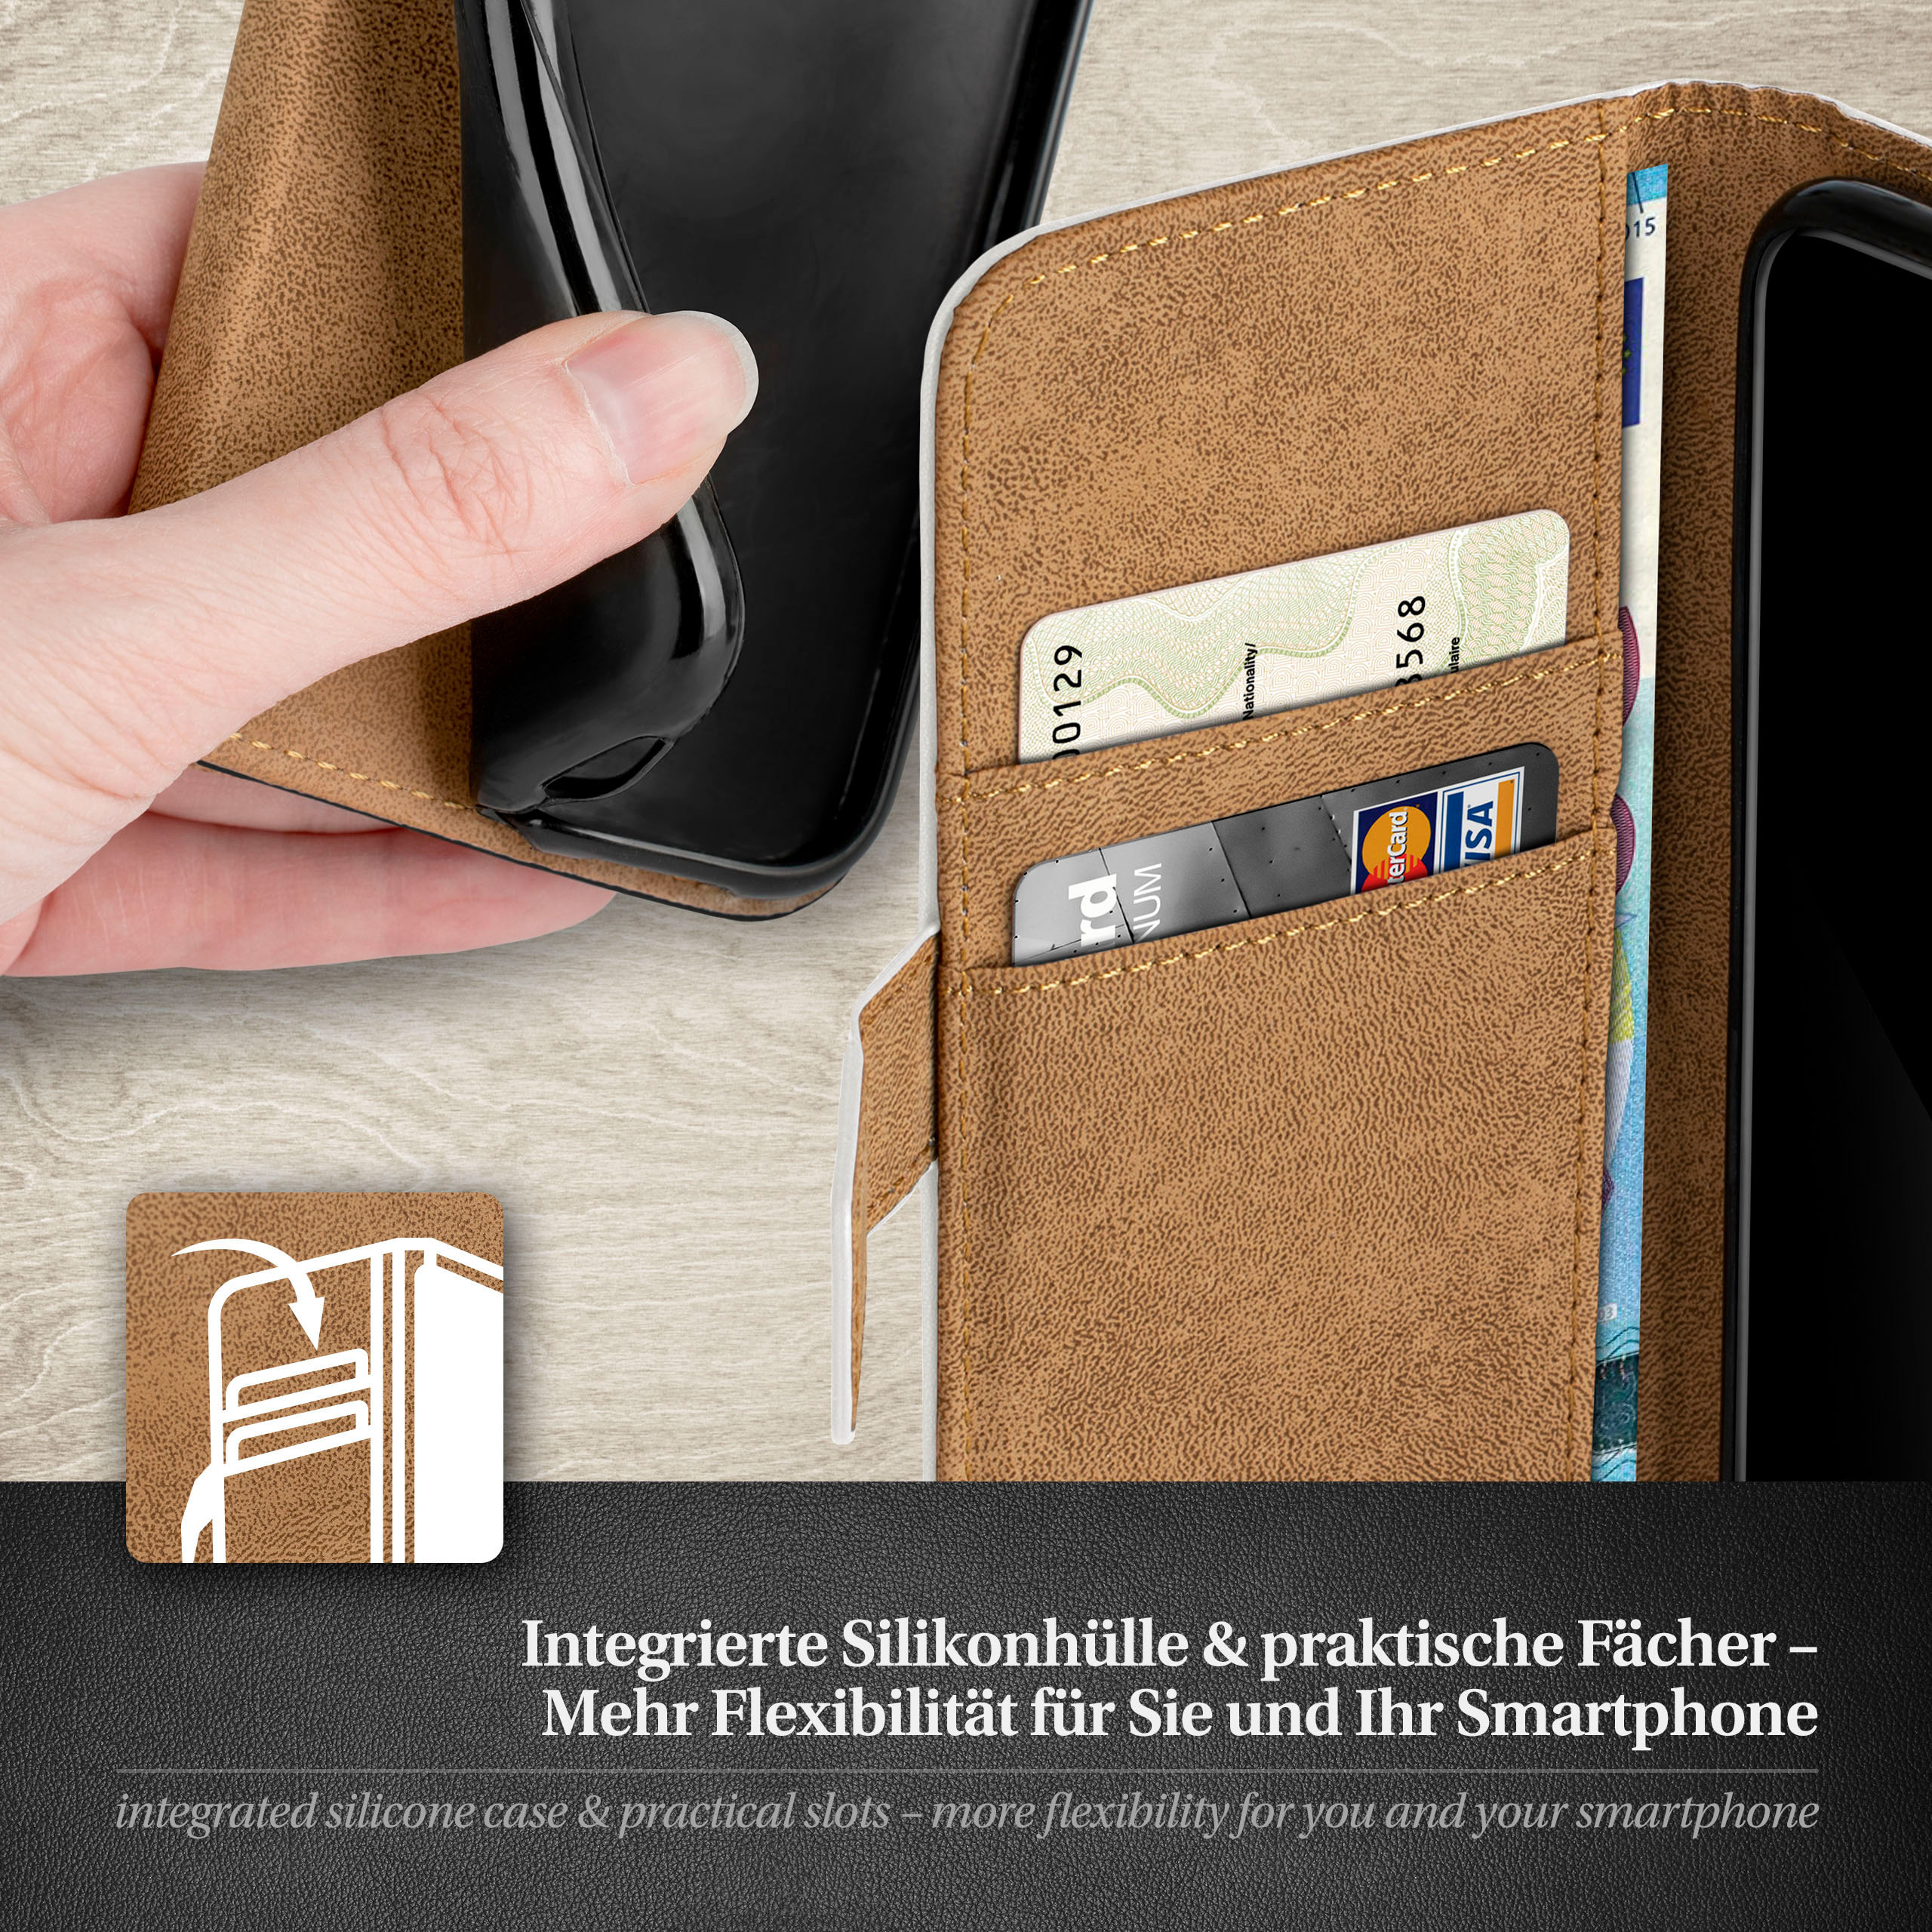 Bookcover, 3 Pearl-White MOEX Neo, Samsung, Book Case, Galaxy Note